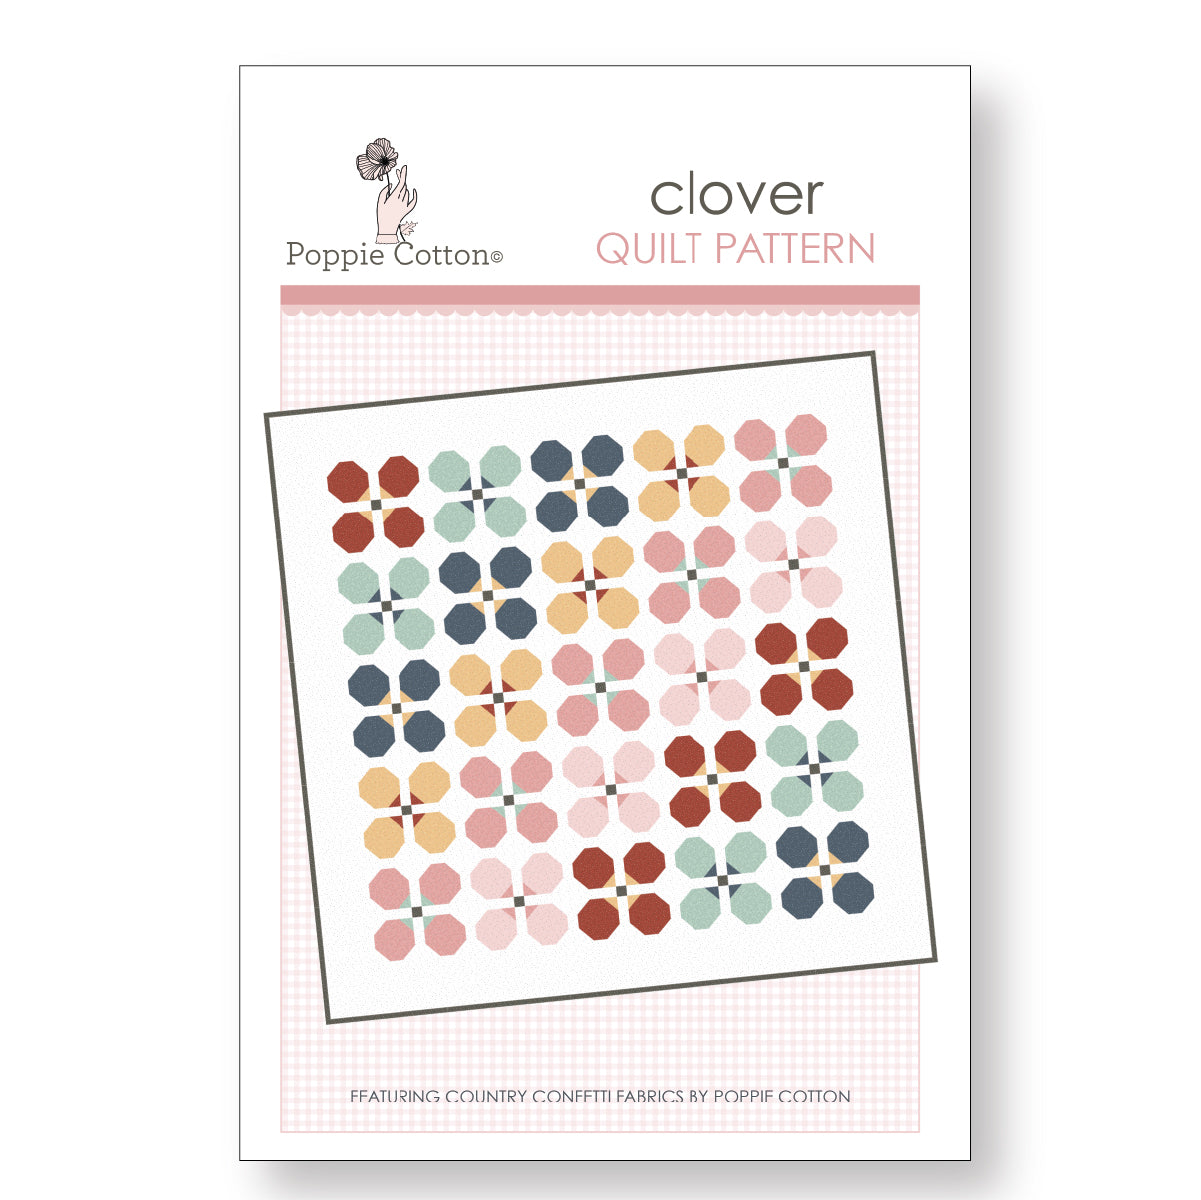 Clover Quilt Pattern by Poppie Cotton Fabrics